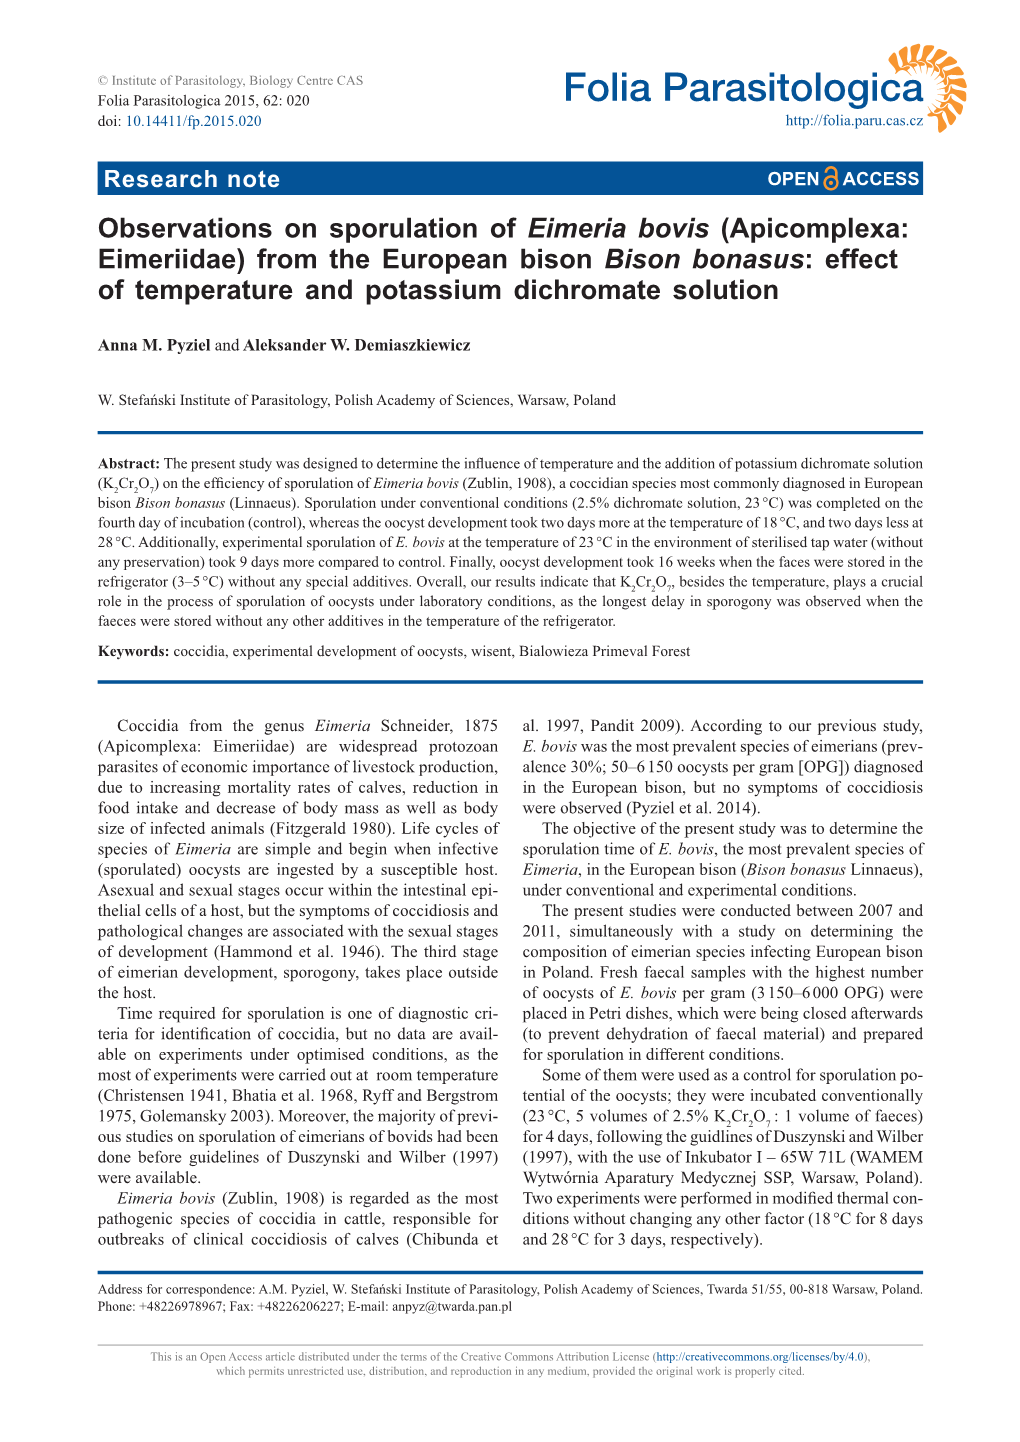 Observations on Sporulation of Eimeria Bovis (Apicomplexa: Eimeriidae) from the European Bison Bison Bonasus: Effect of Temperature and Potassium Dichromate Solution